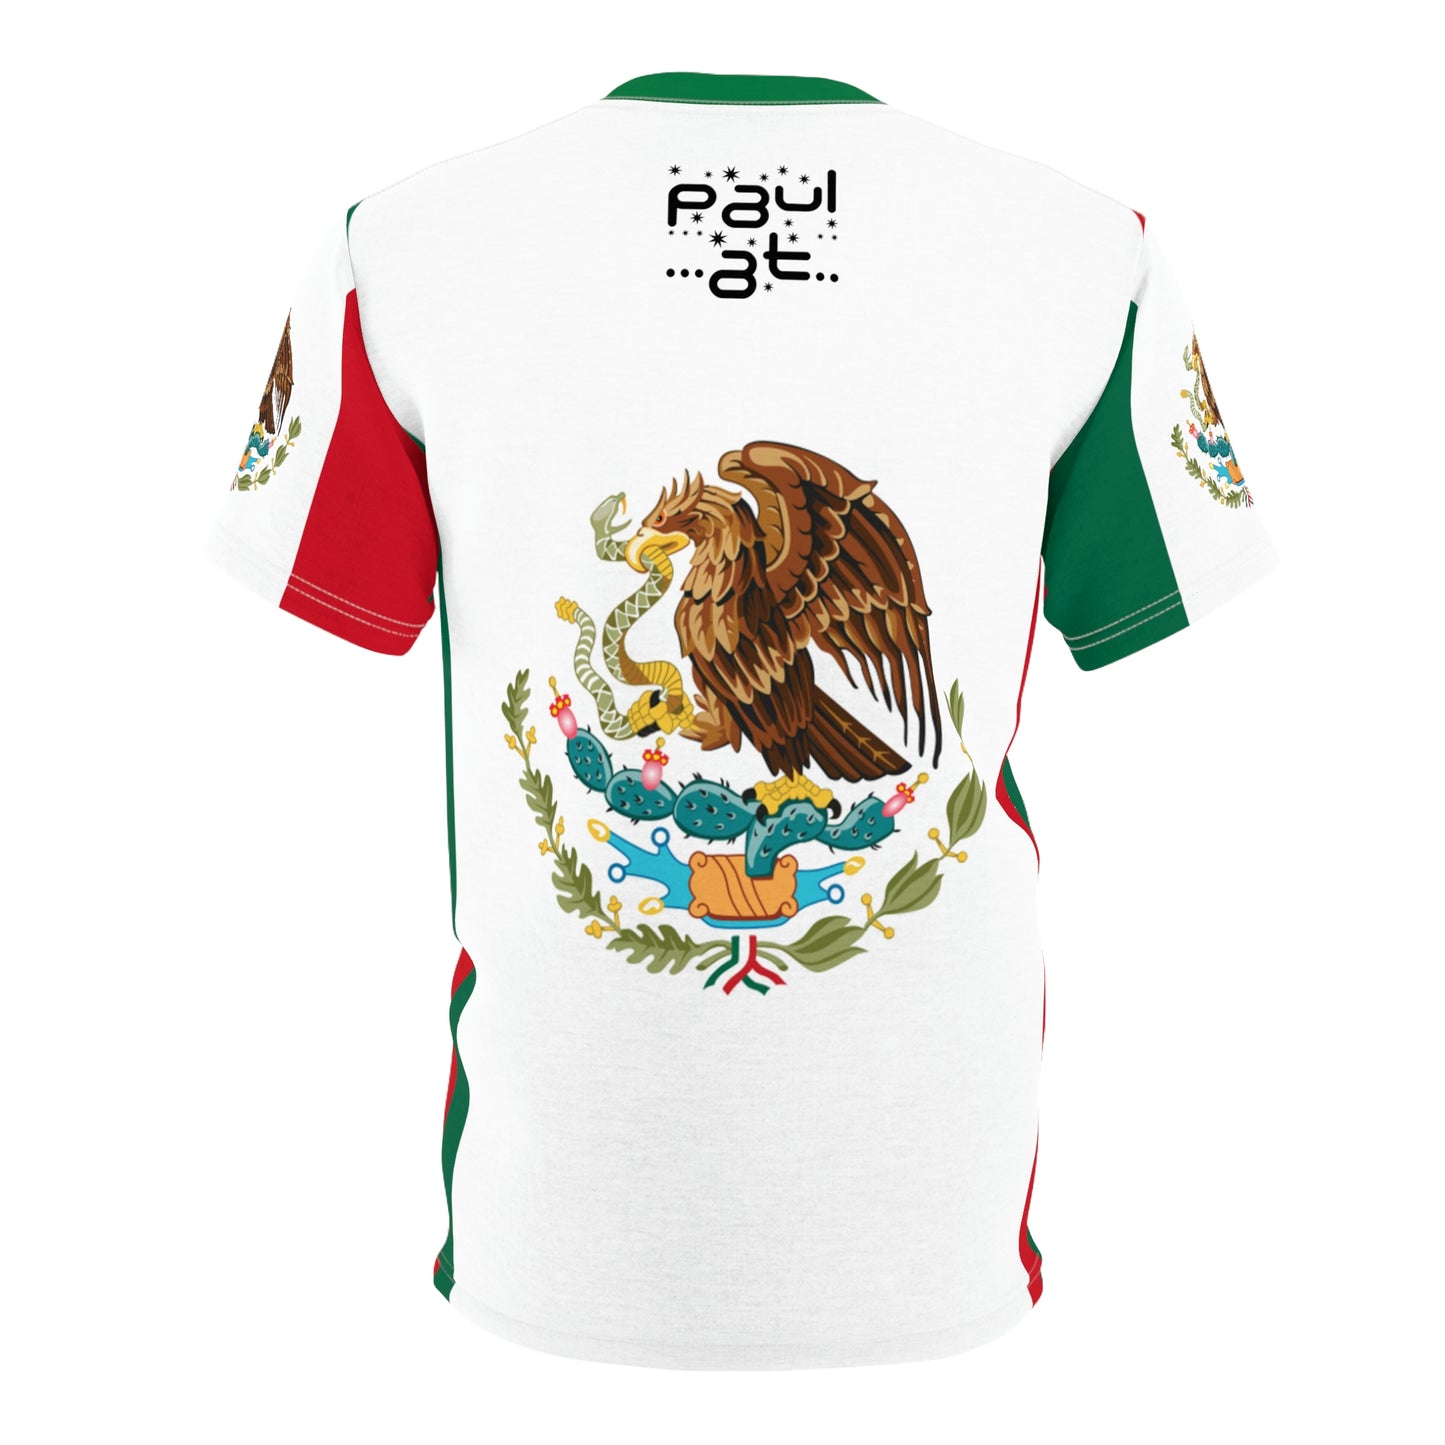 Mexico Unisex T-Shirt